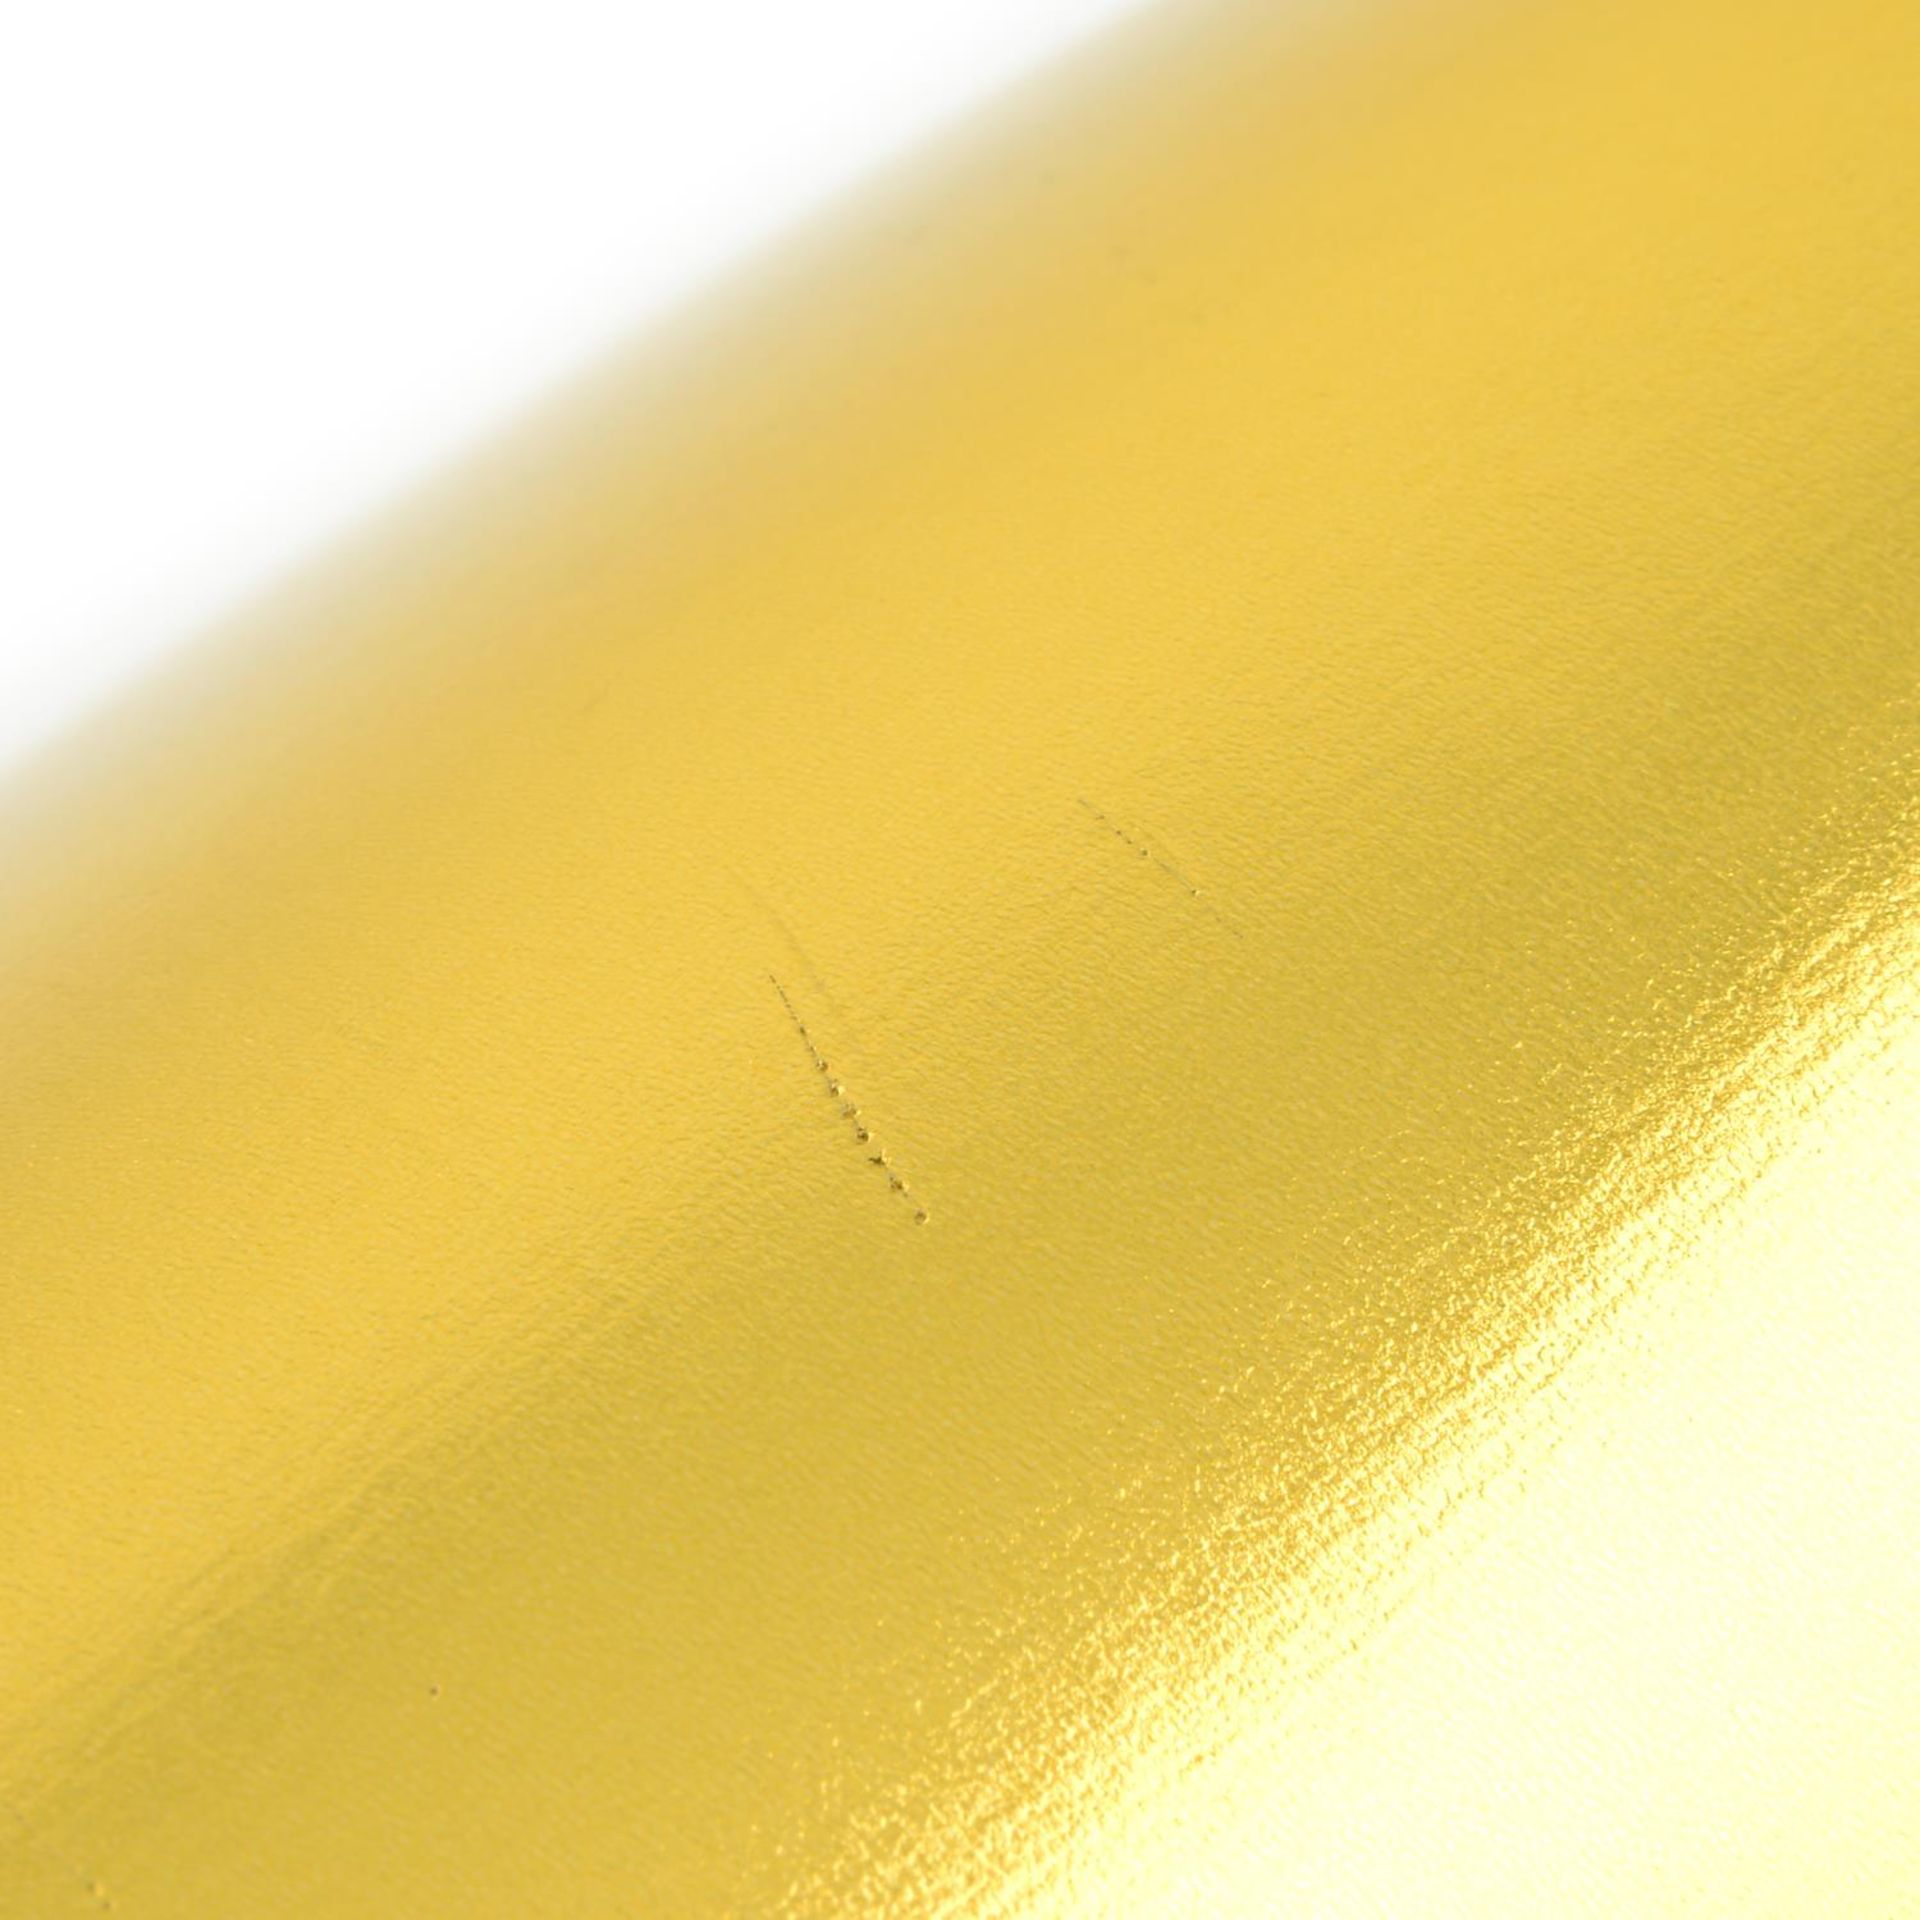 CÉLINE - a metallic gold Box handbag. - Image 9 of 9